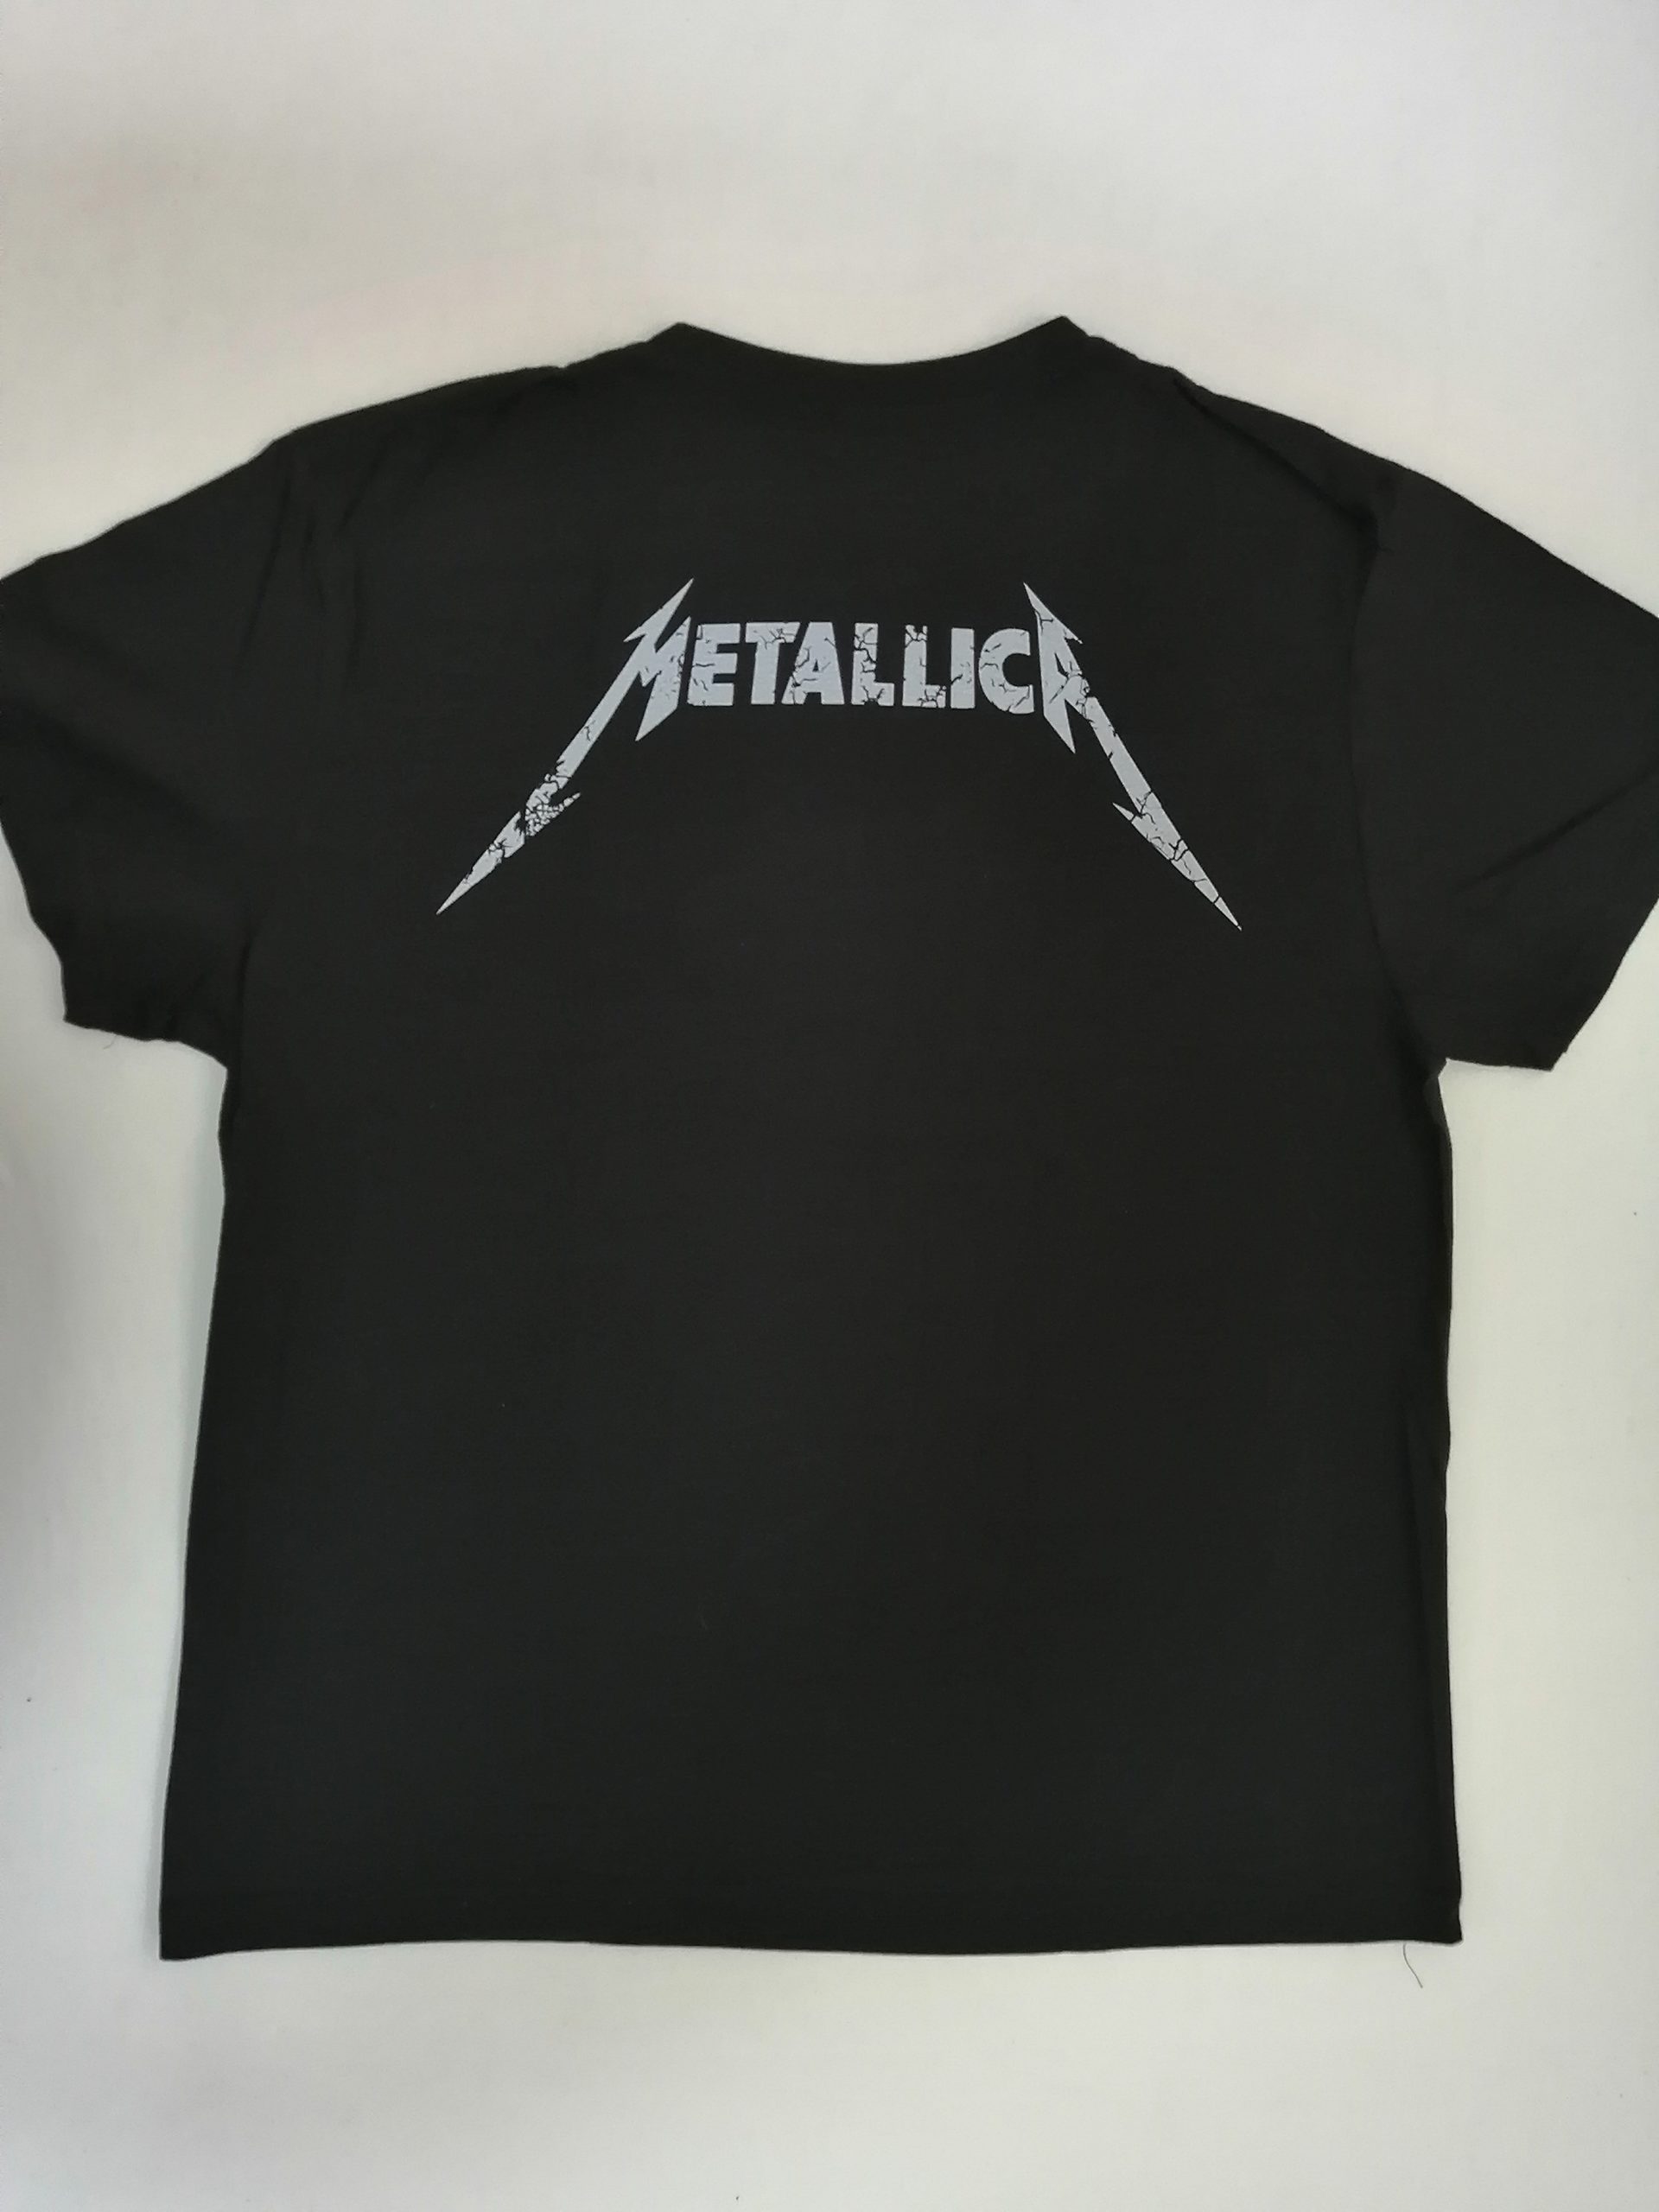 Metallica - Guitar